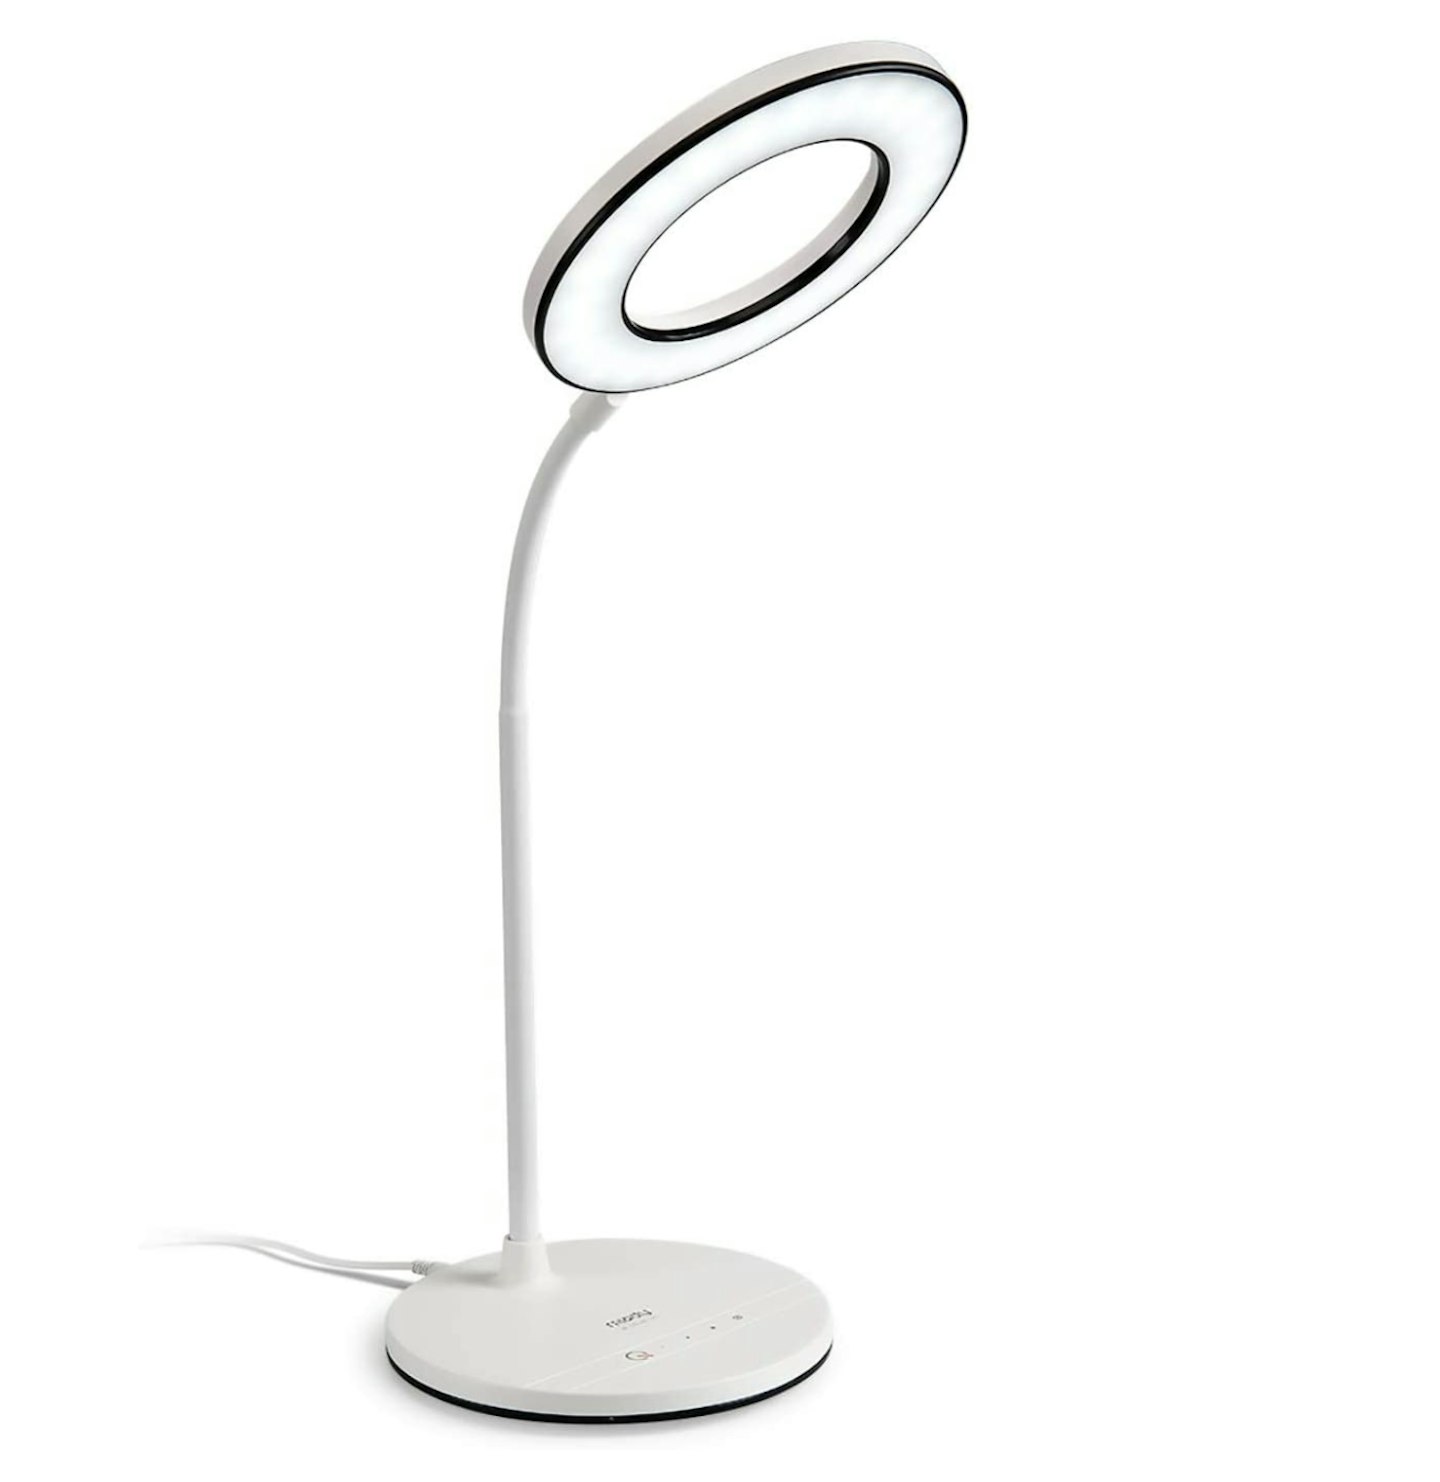 Miady LED Desk Lamp